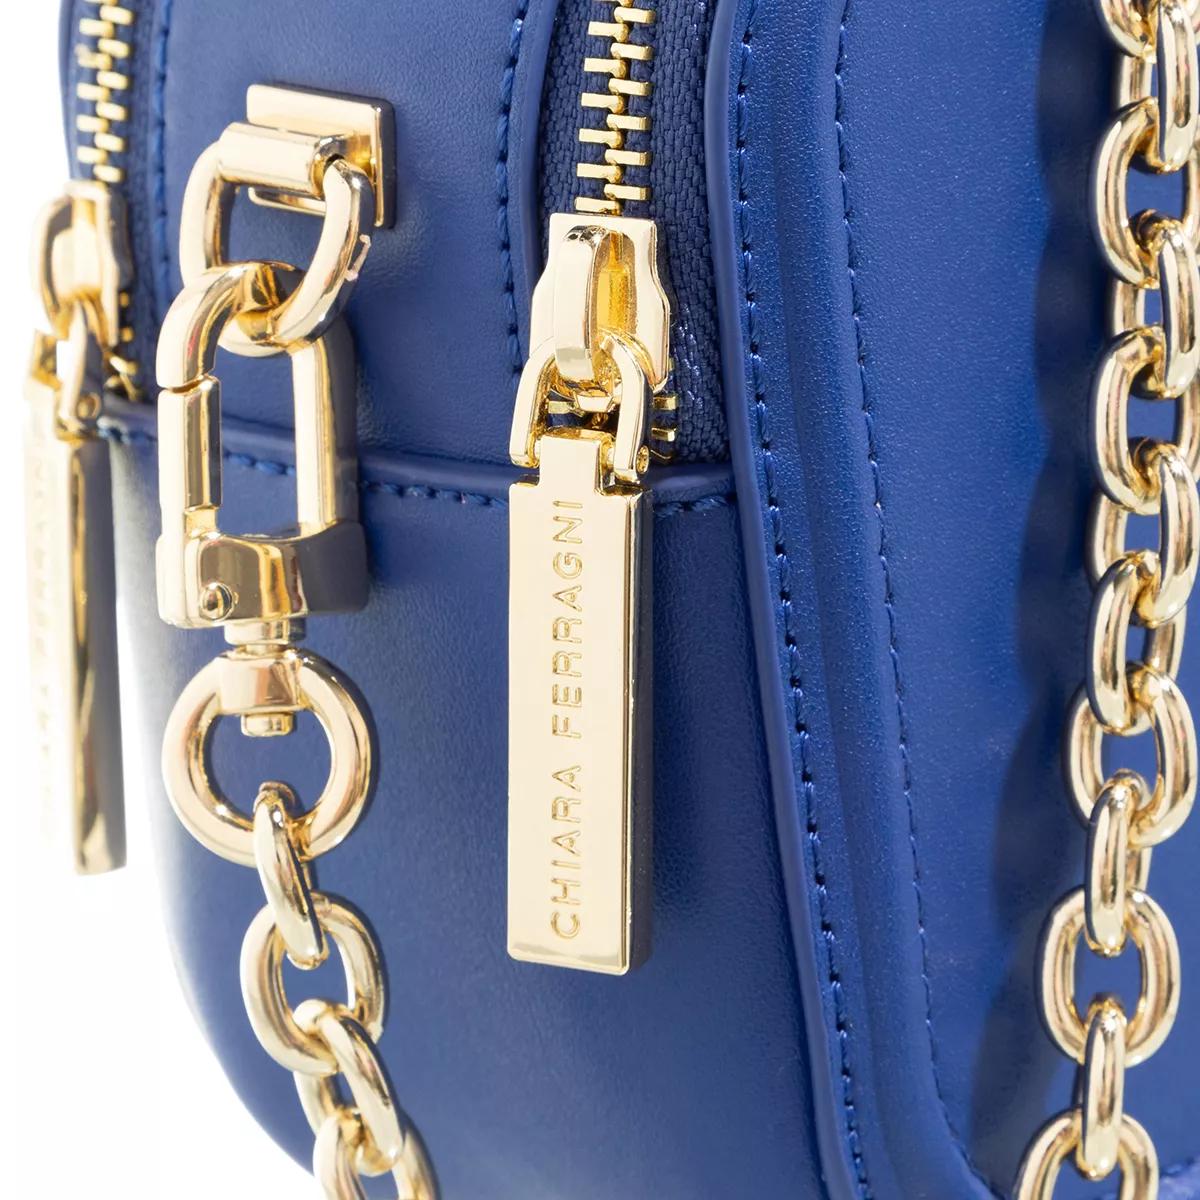 Chiara Ferragni Totes Range A Eyelike Bags Sketch 05 Bags in blauw